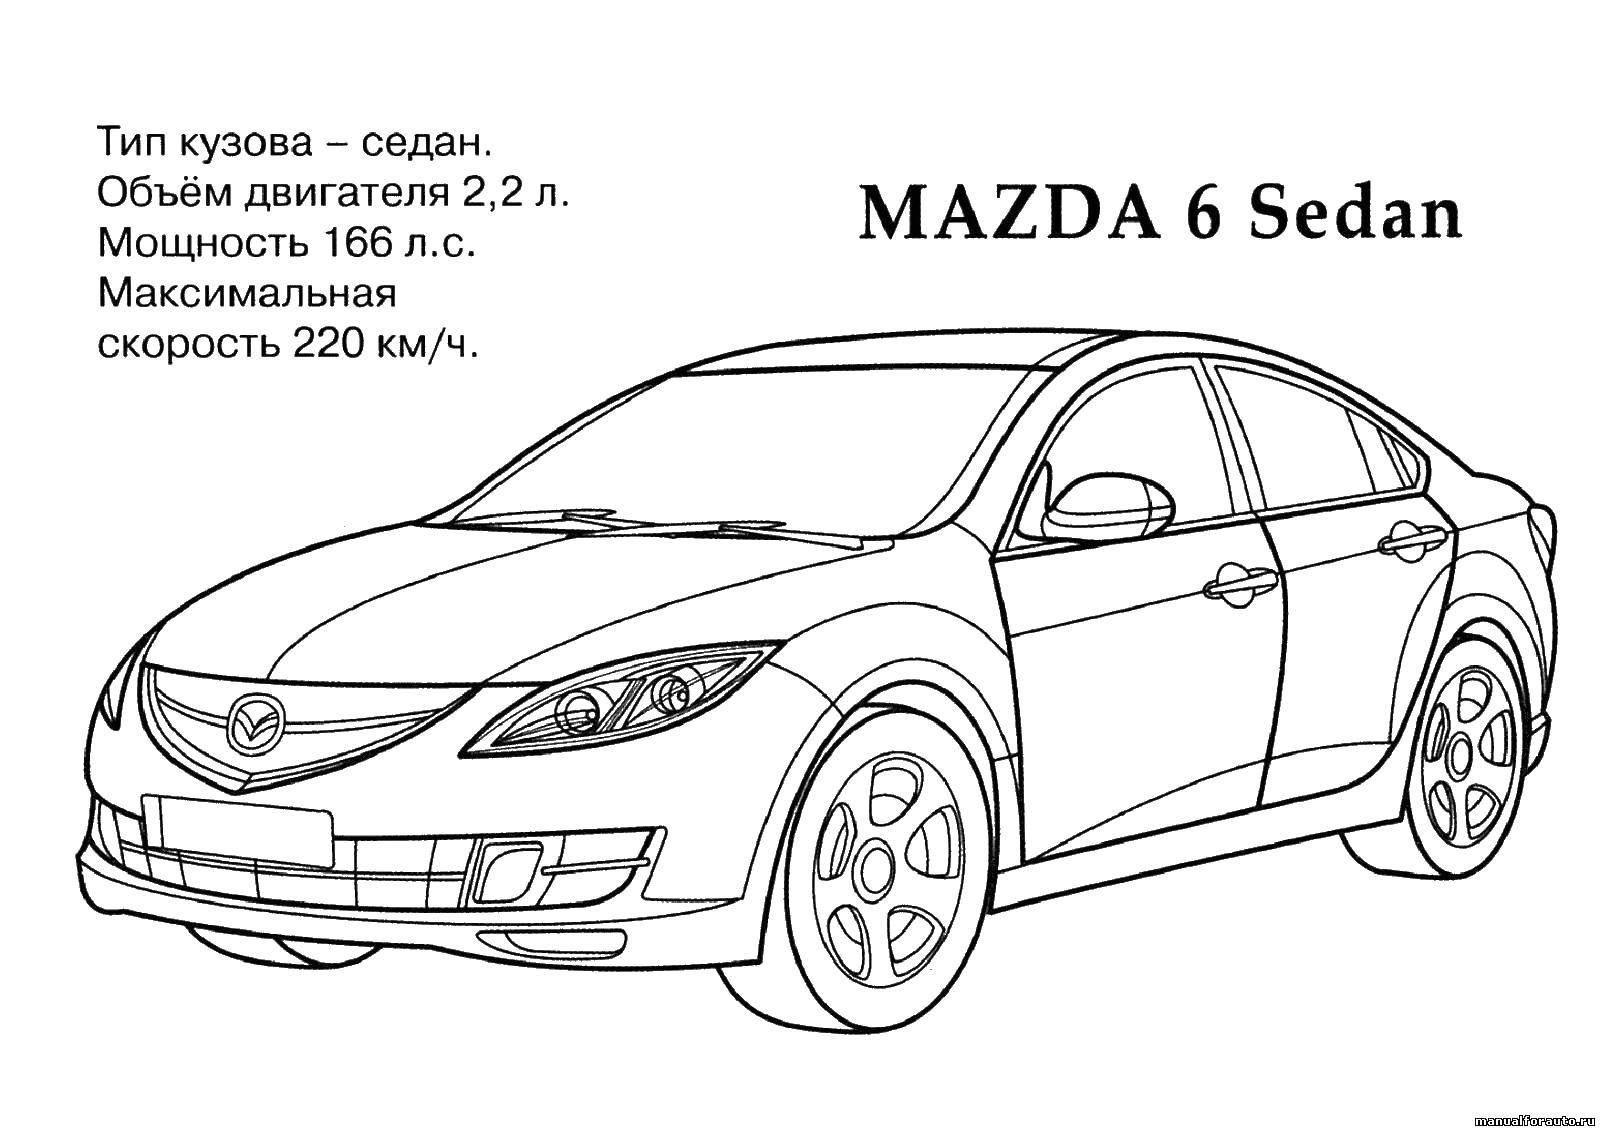 Coloring Mazda 6 sedan. Category coloring. Tags:  Transport, car.